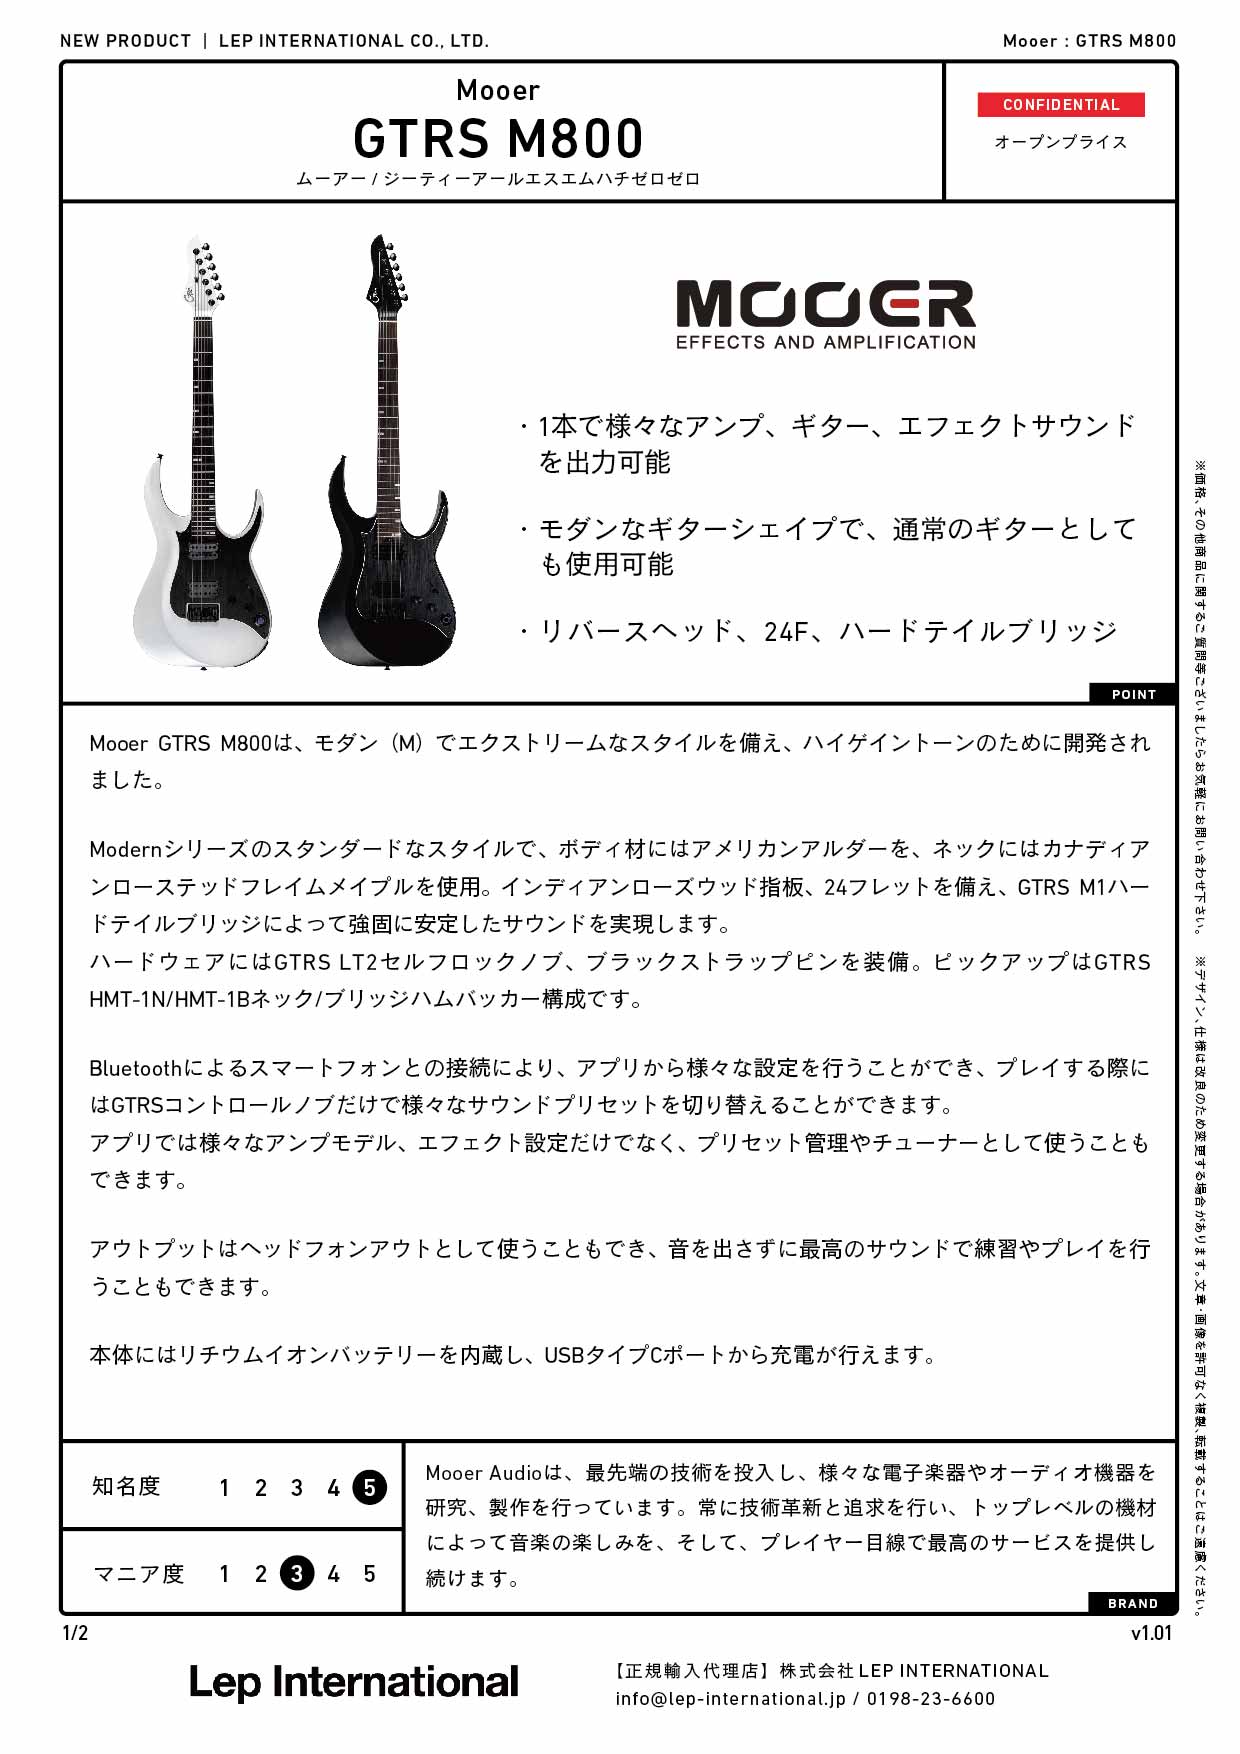 Mooer / GTRS M800 – LEP INTERNATIONAL